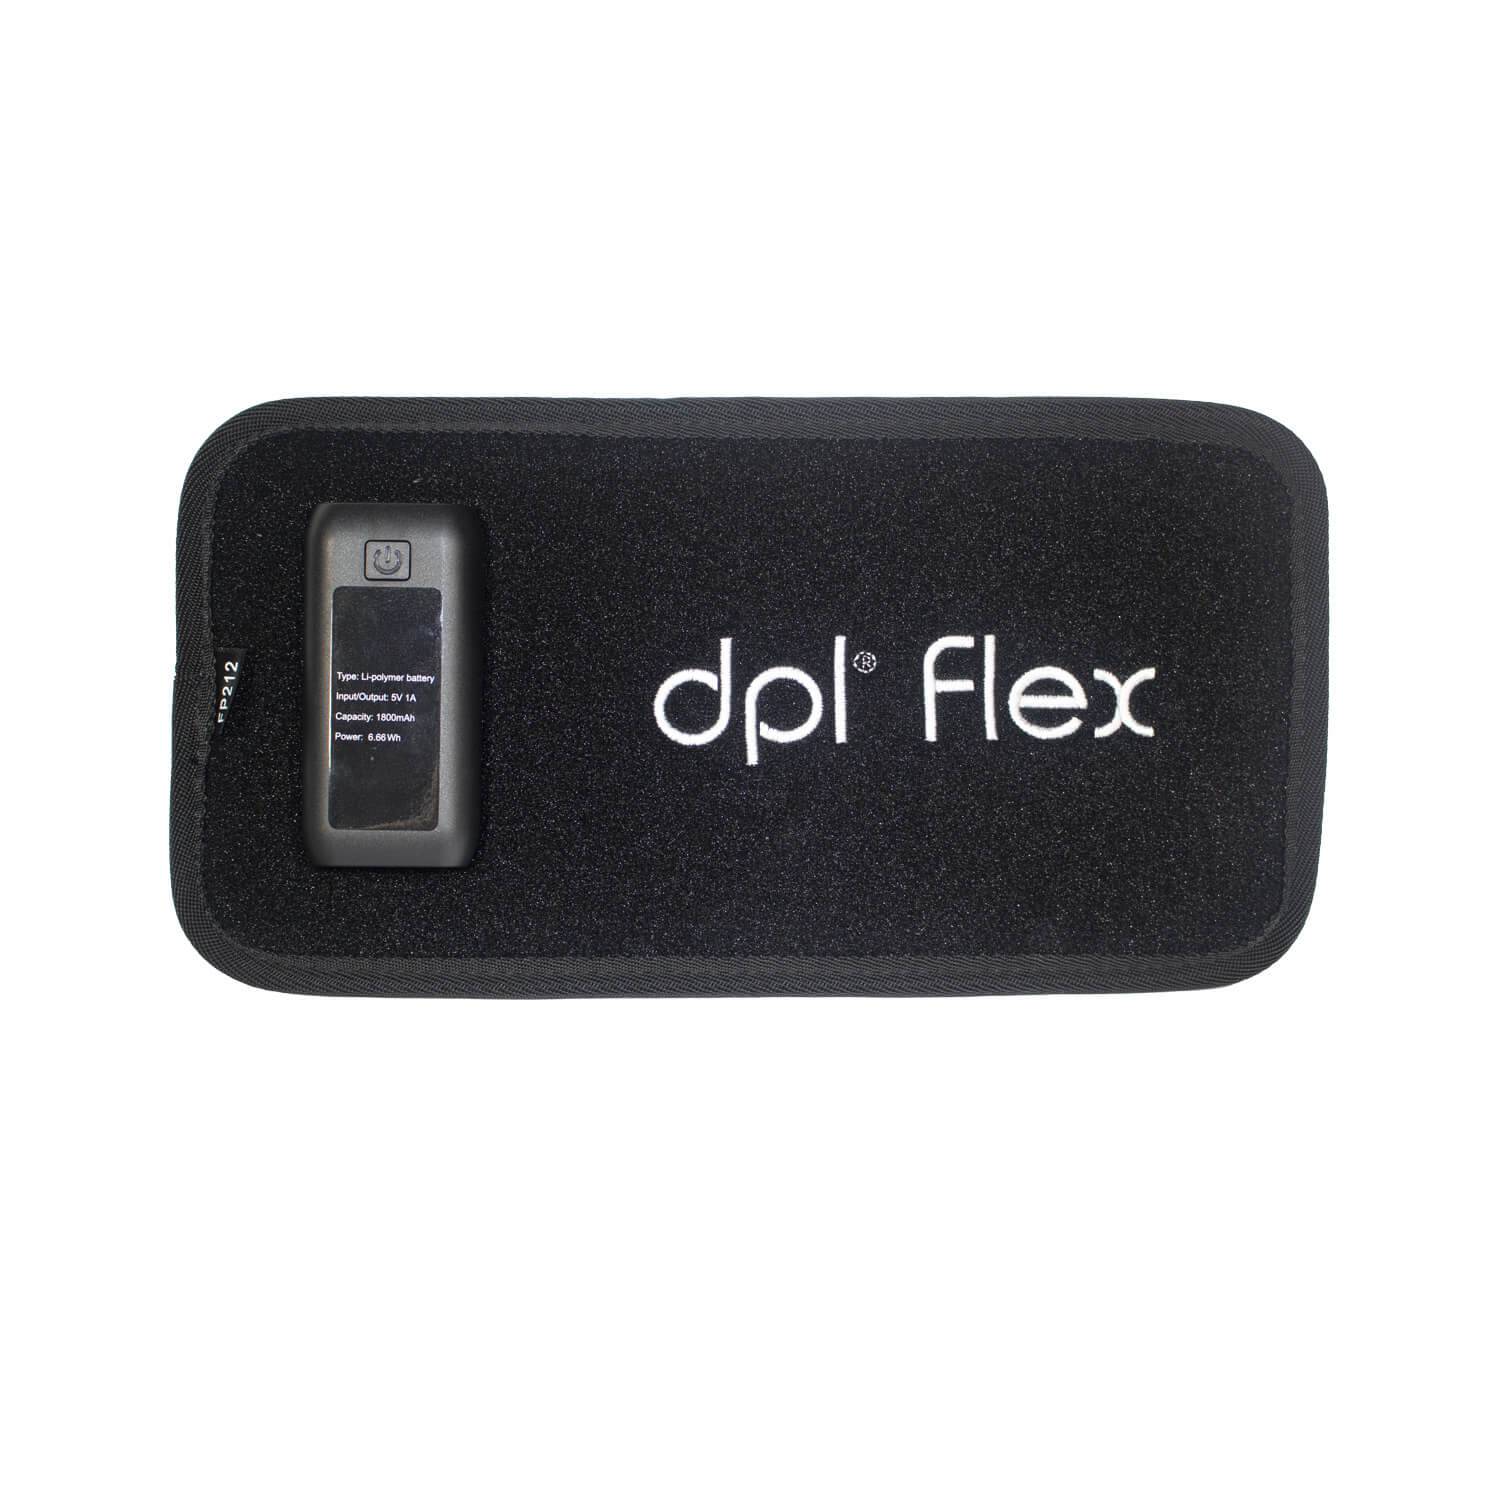 DPL Flex Pad - Neck & Back Pain Relief Light Therapy Wrap - Carex Health Brands